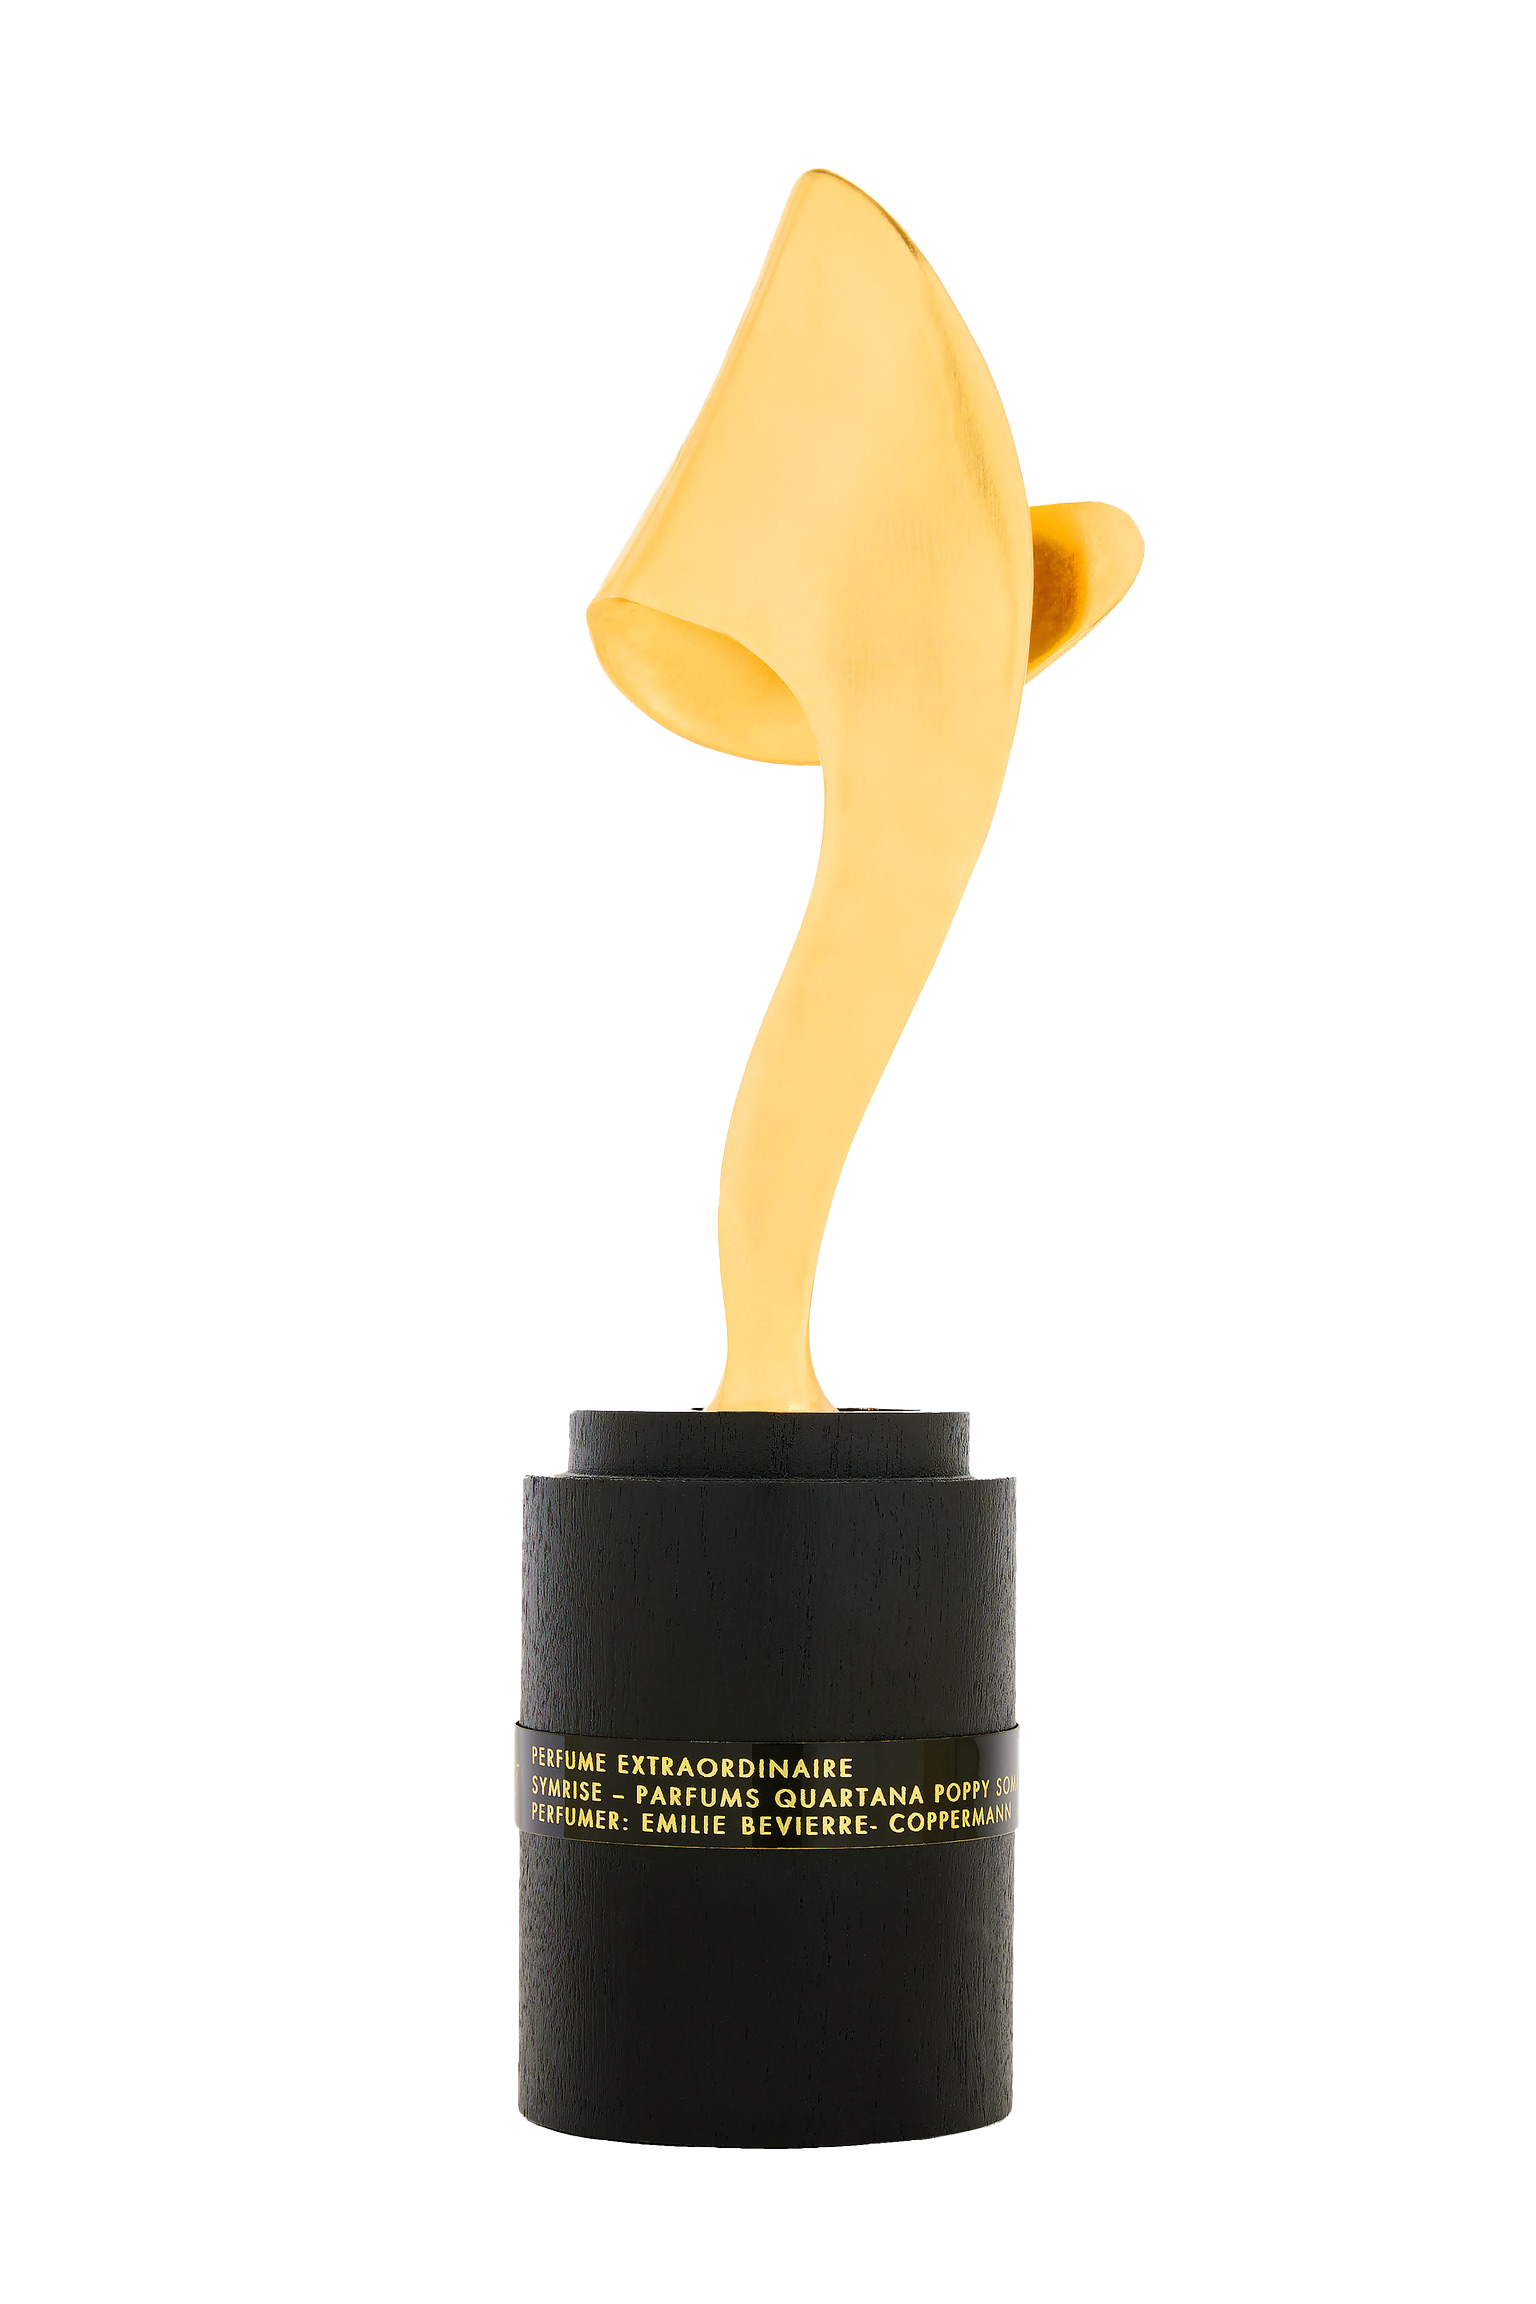 The Fragrance Foundation Perfume Extraordinaire Trophy